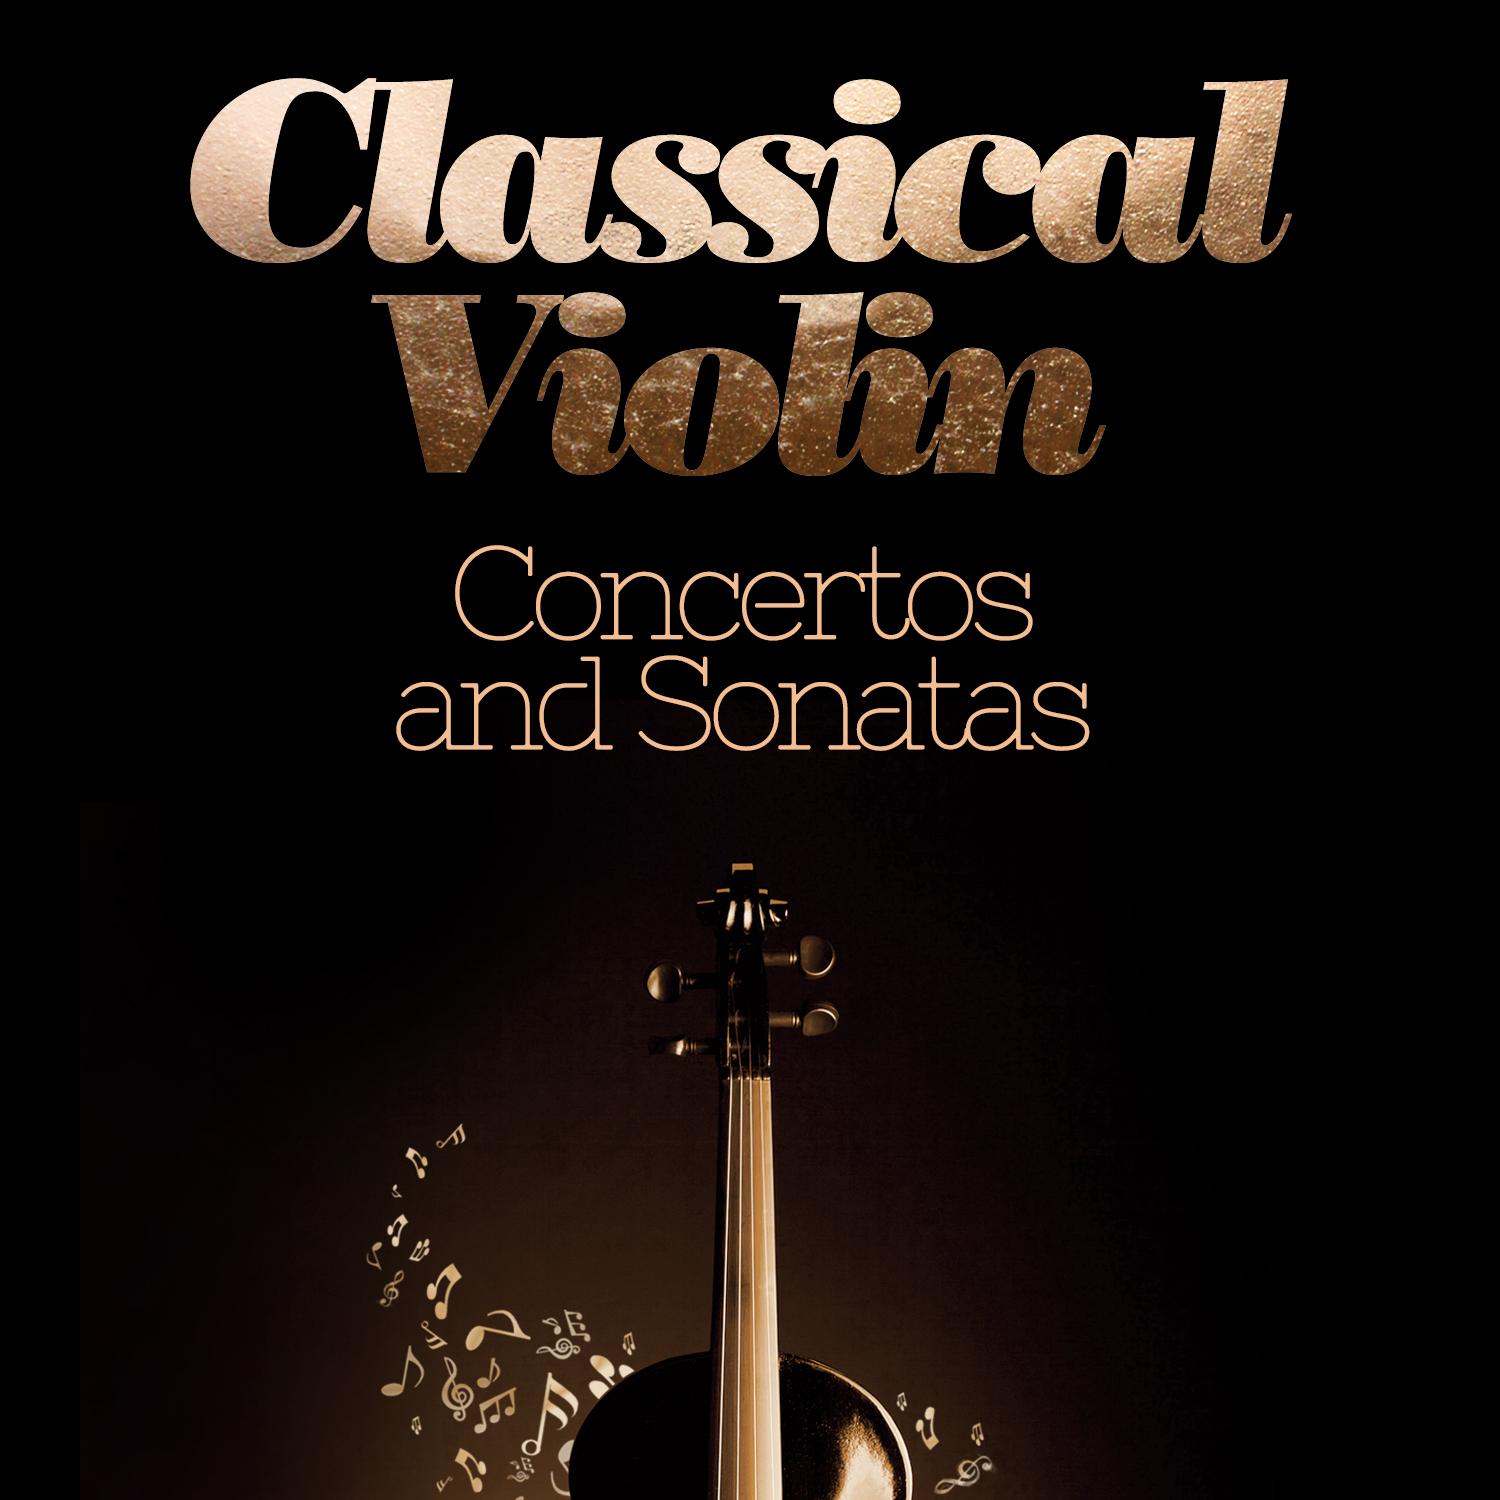 Violin Concerto in D Major, Op. 35: II. Canzonetta: Andante